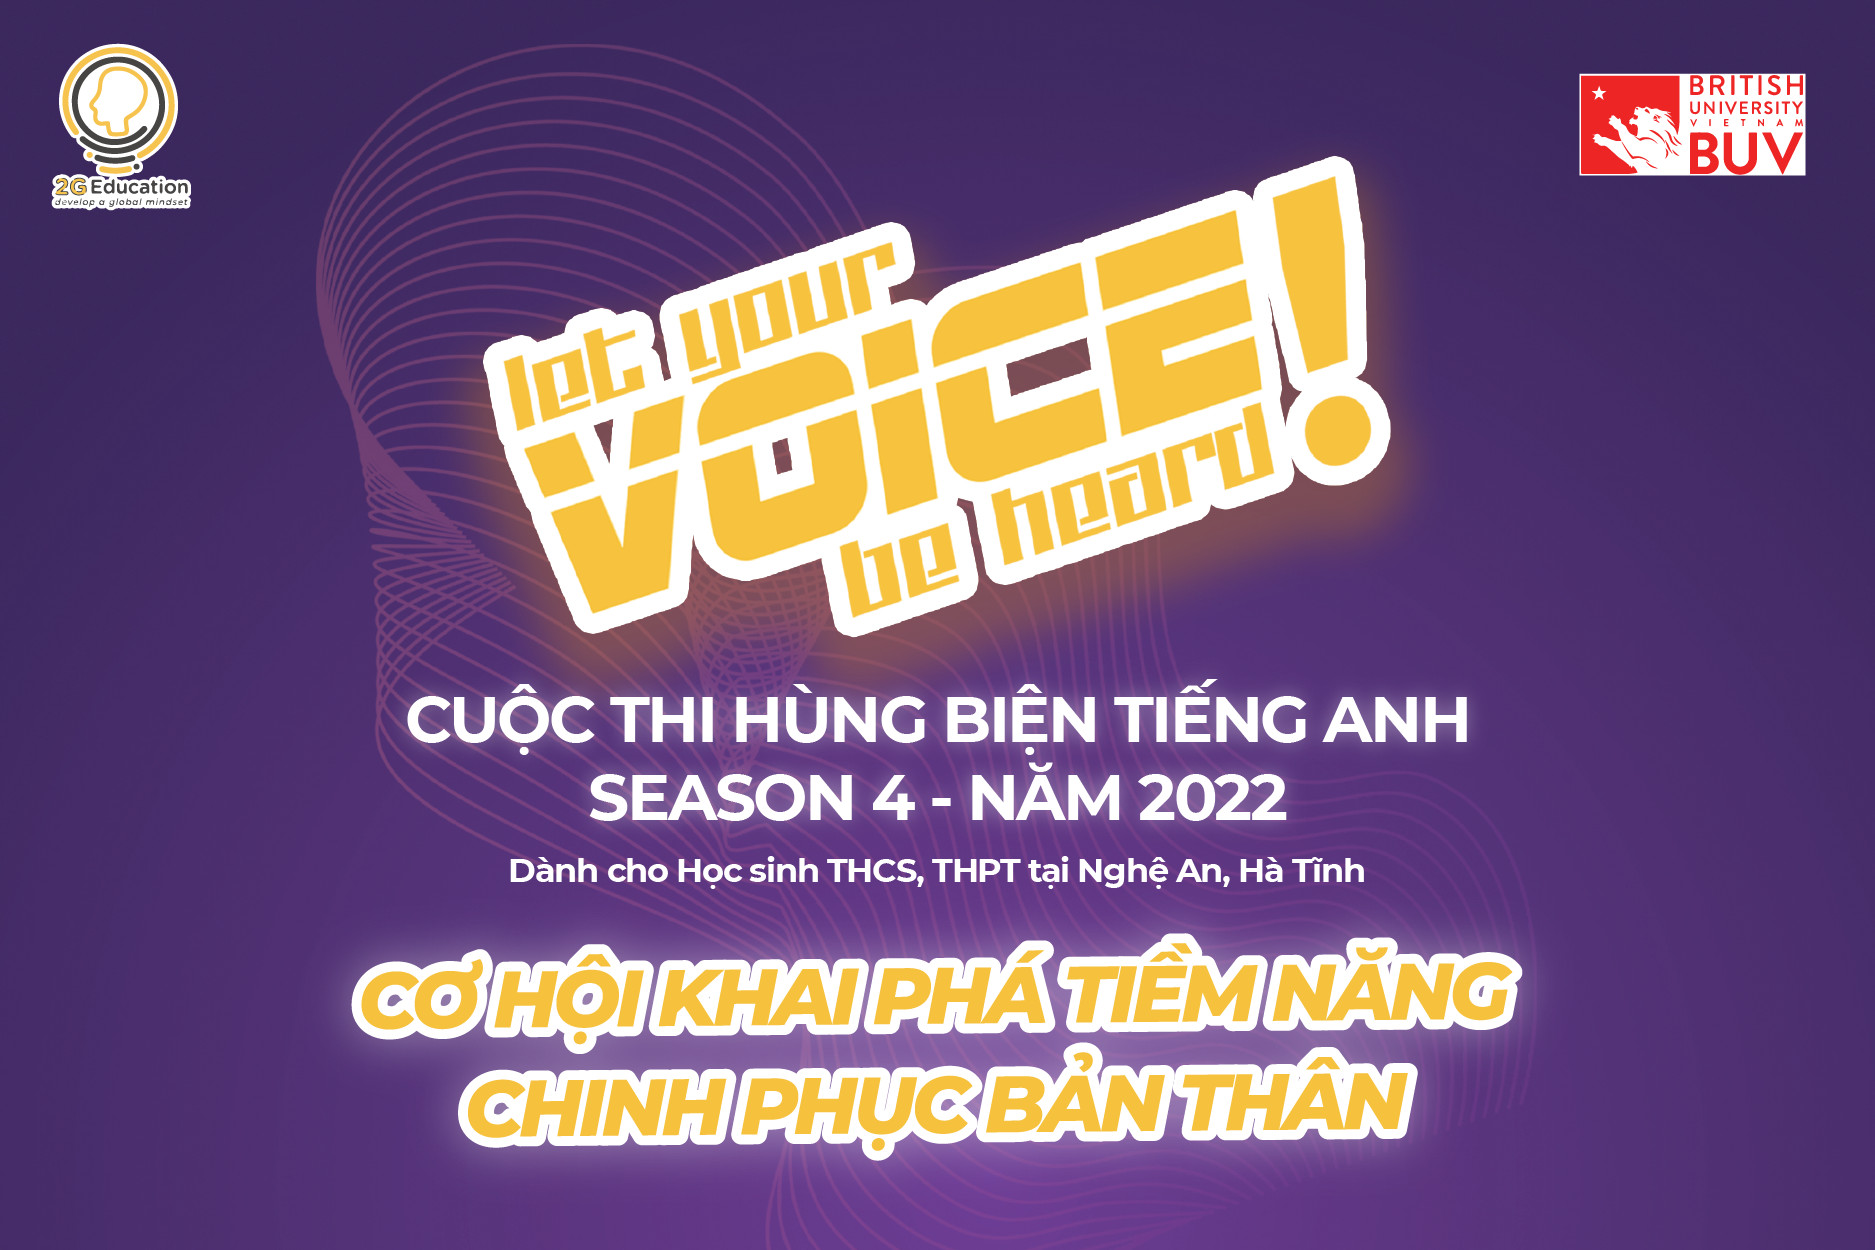 Let Your Voice Be Heard Season 4, 2022